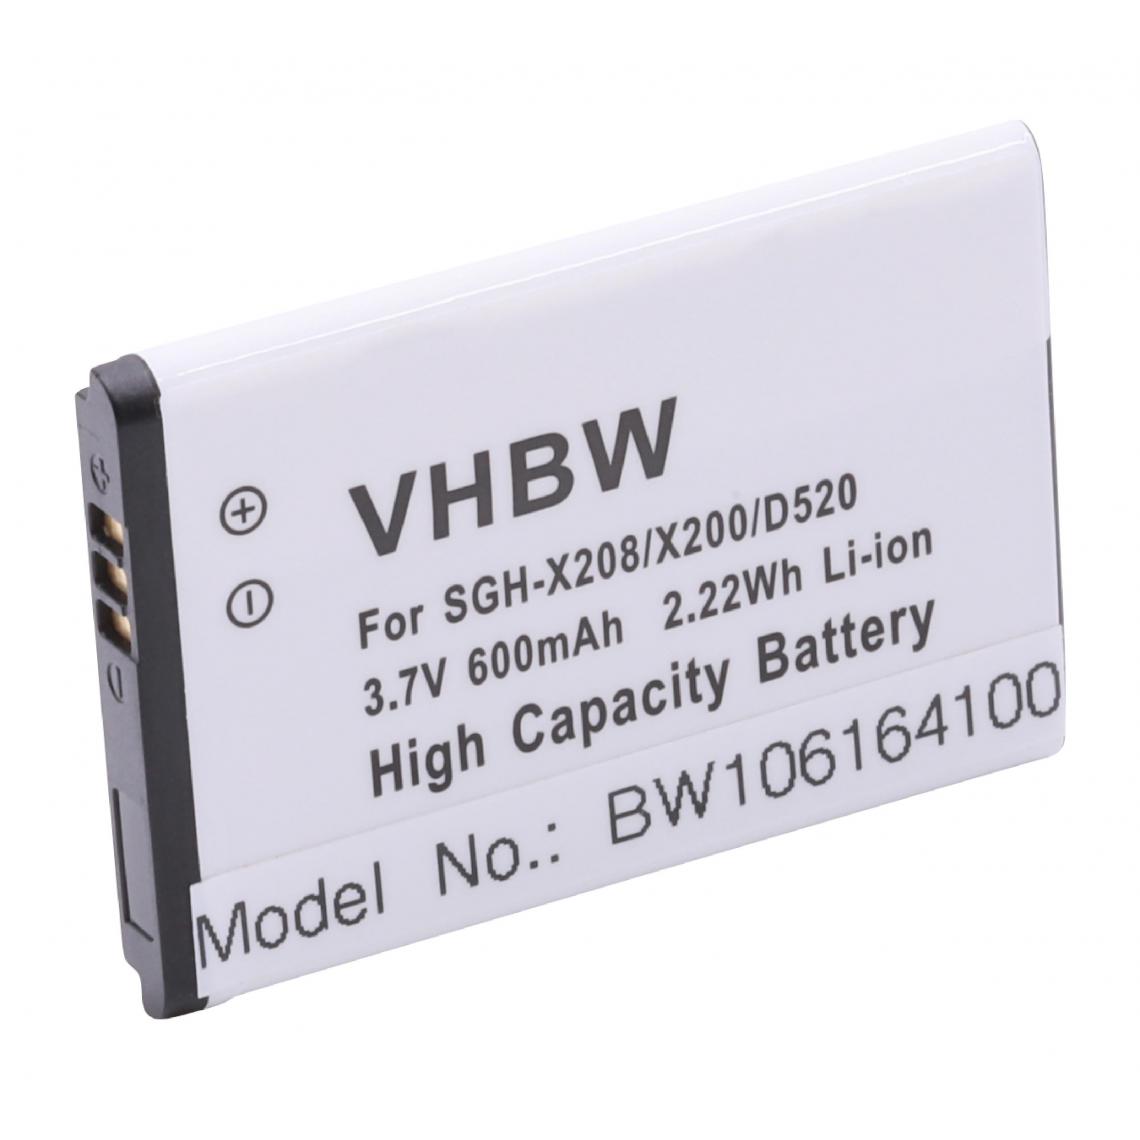 Vhbw - vhbw Batterie compatible avec Samsung SGH-X510, SGH-X520, SGH-X530, SGH-X550, SGH-X630, SGH-X680, SGH-X680v Smartphone (600mAh, 3.7V, Li-Ion) - Batterie téléphone